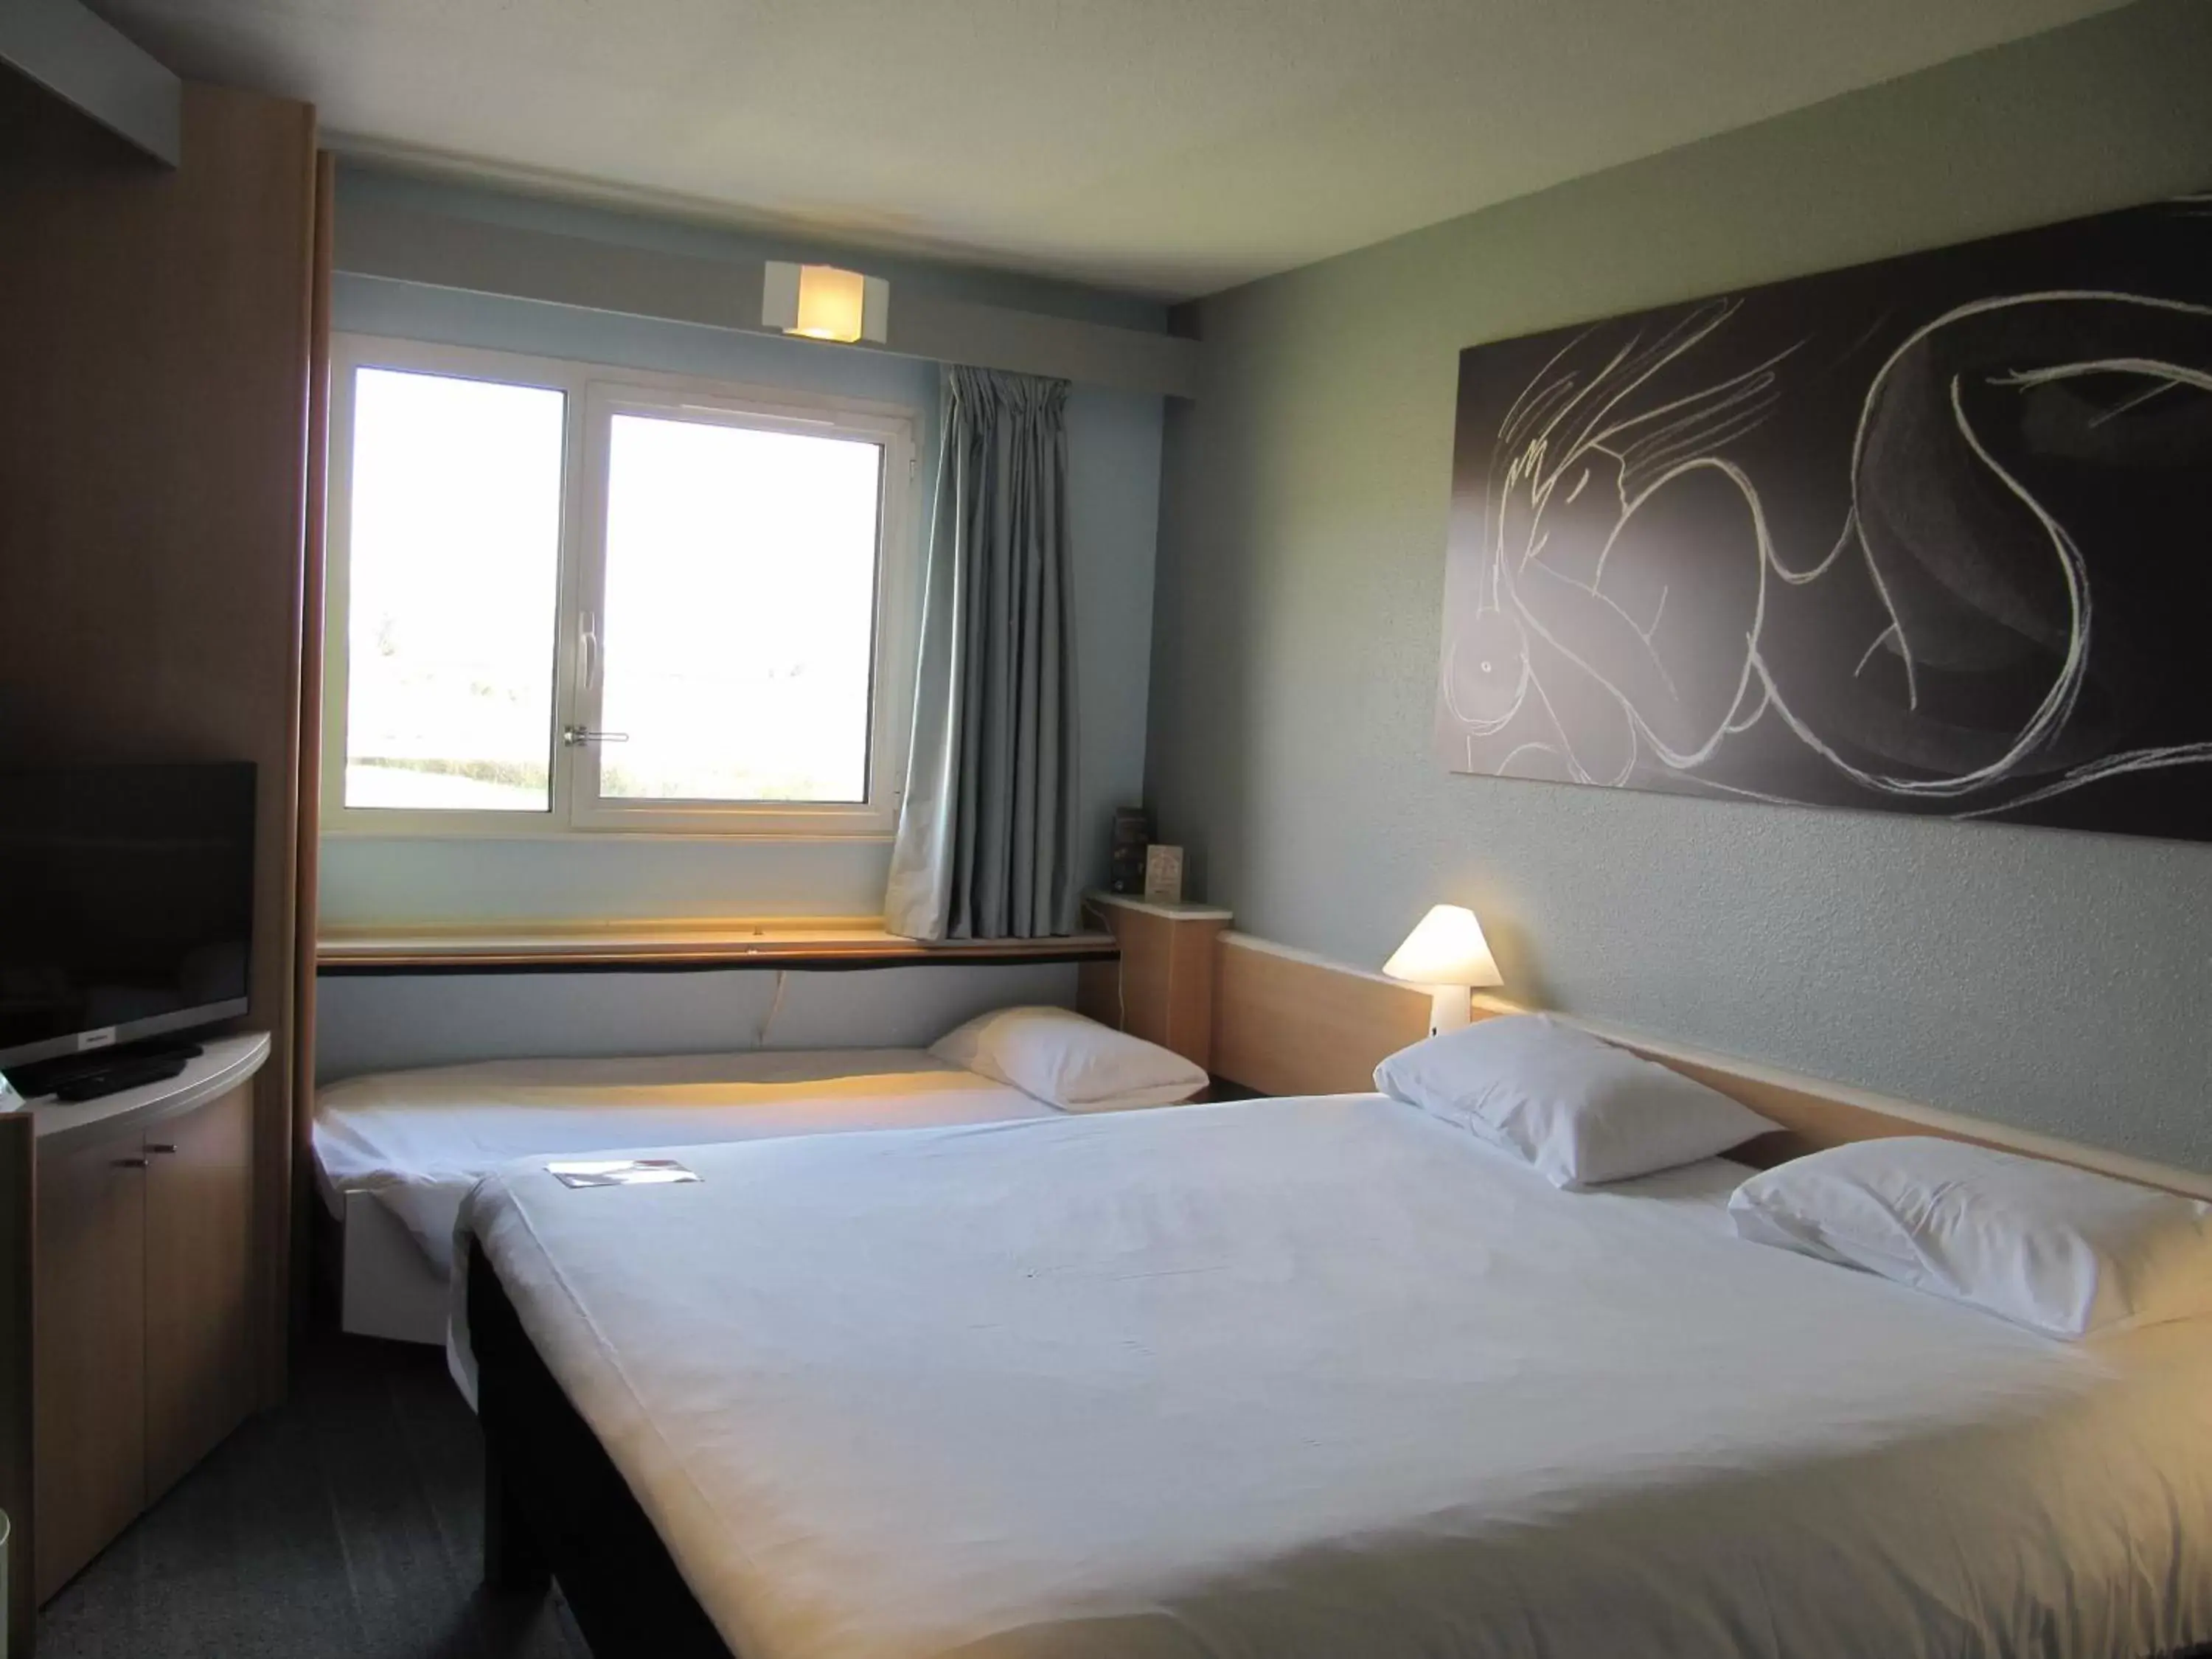 Bed, Room Photo in Hôtel ibis Pontivy